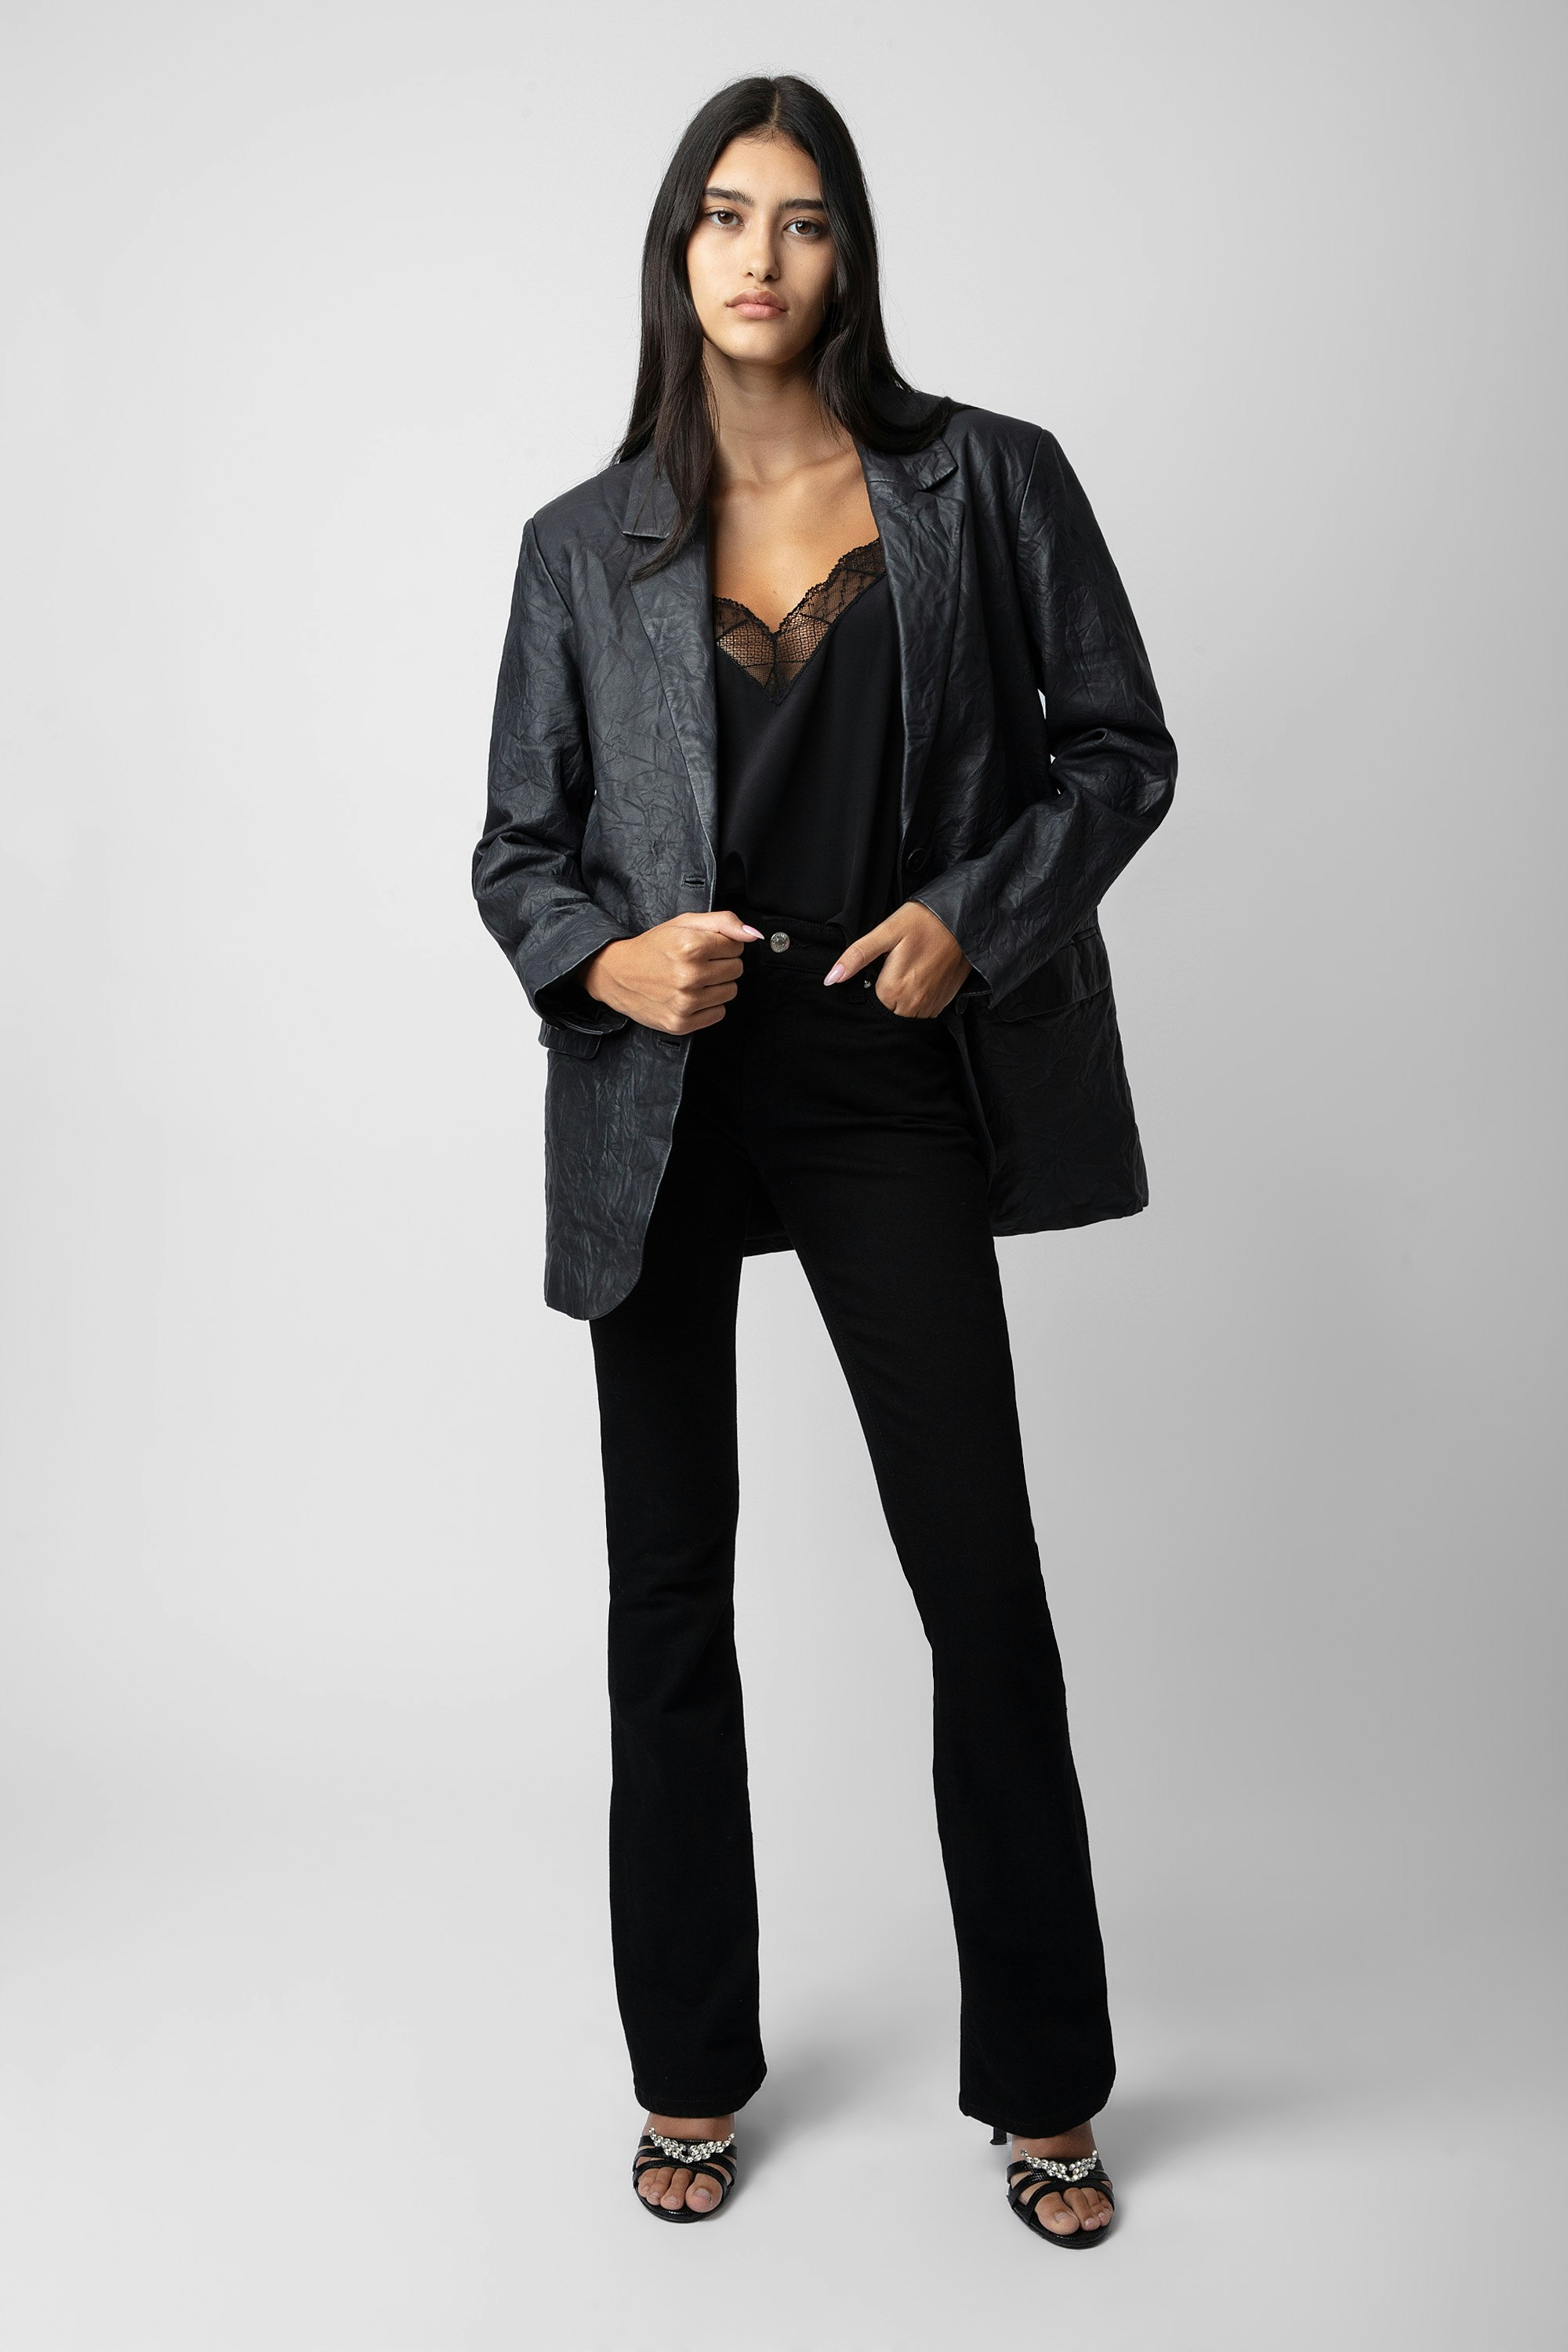 Blazer Venturi pelle stropicciata - Giacca blazer in pelle stropicciata antracite da donna.